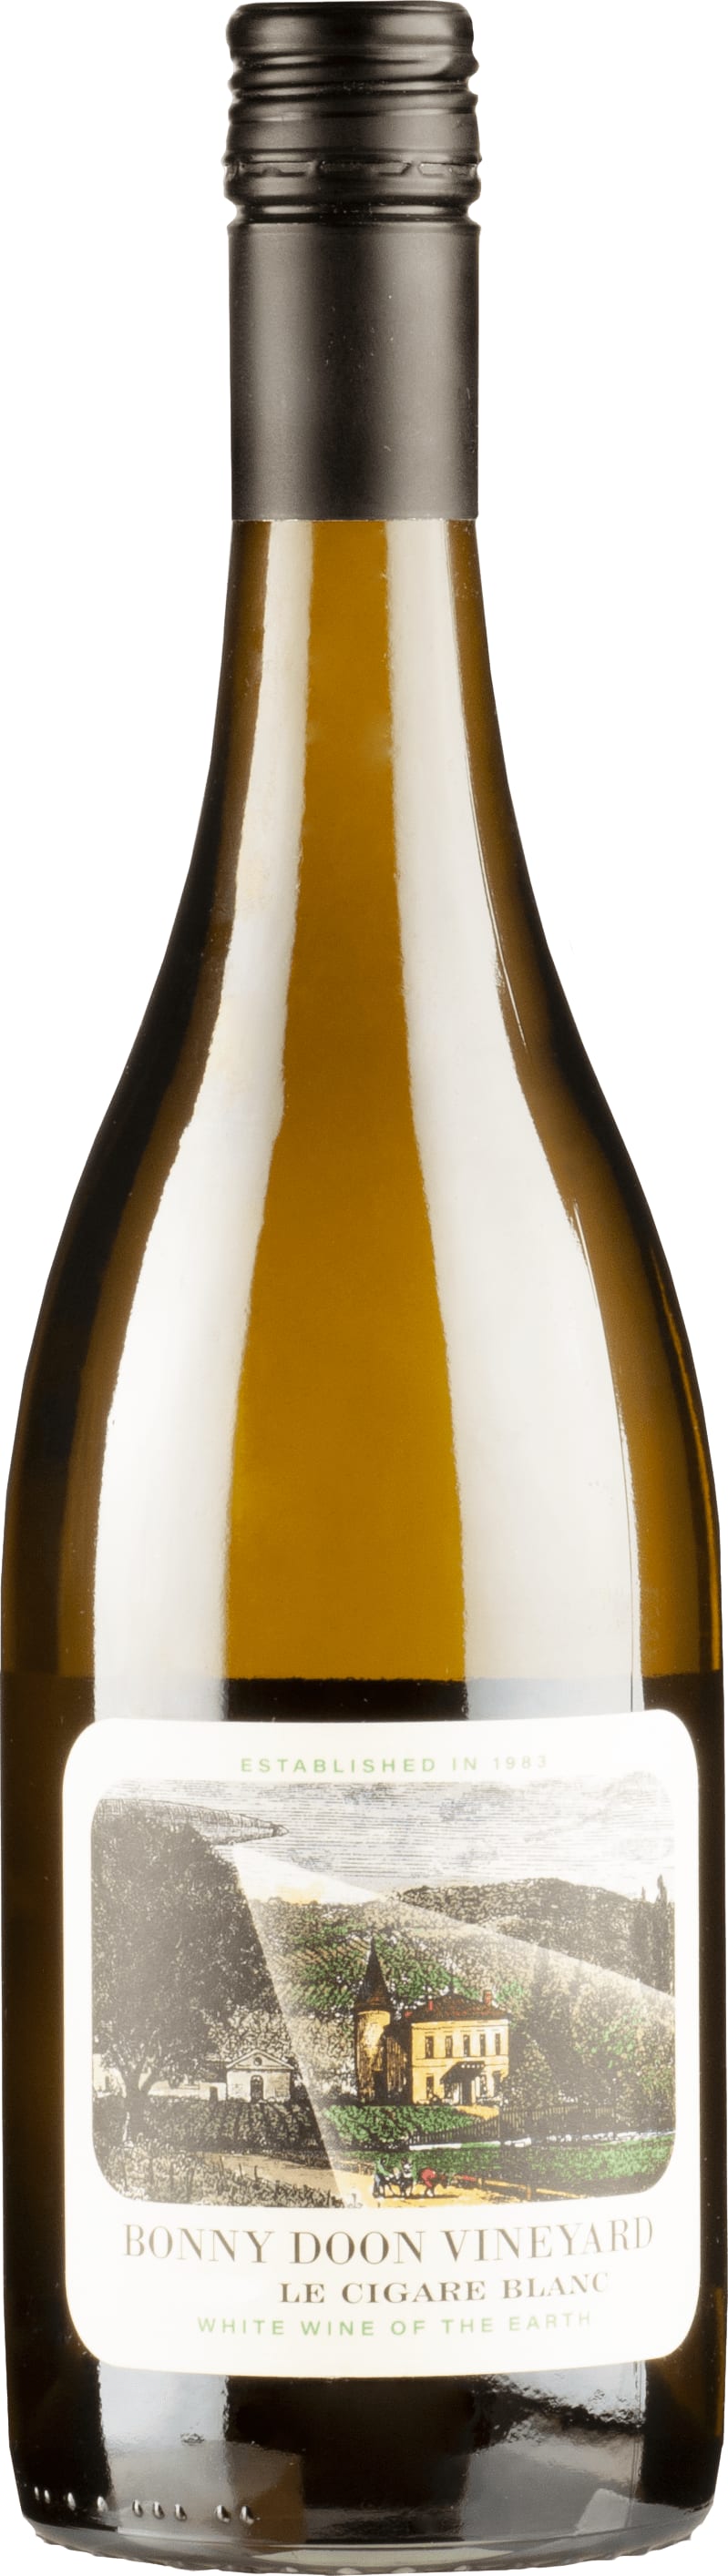 Bonny Doon Vineyard Le Cigare Blanc 2020 75cl - Buy Bonny Doon Vineyard Wines from GREAT WINES DIRECT wine shop